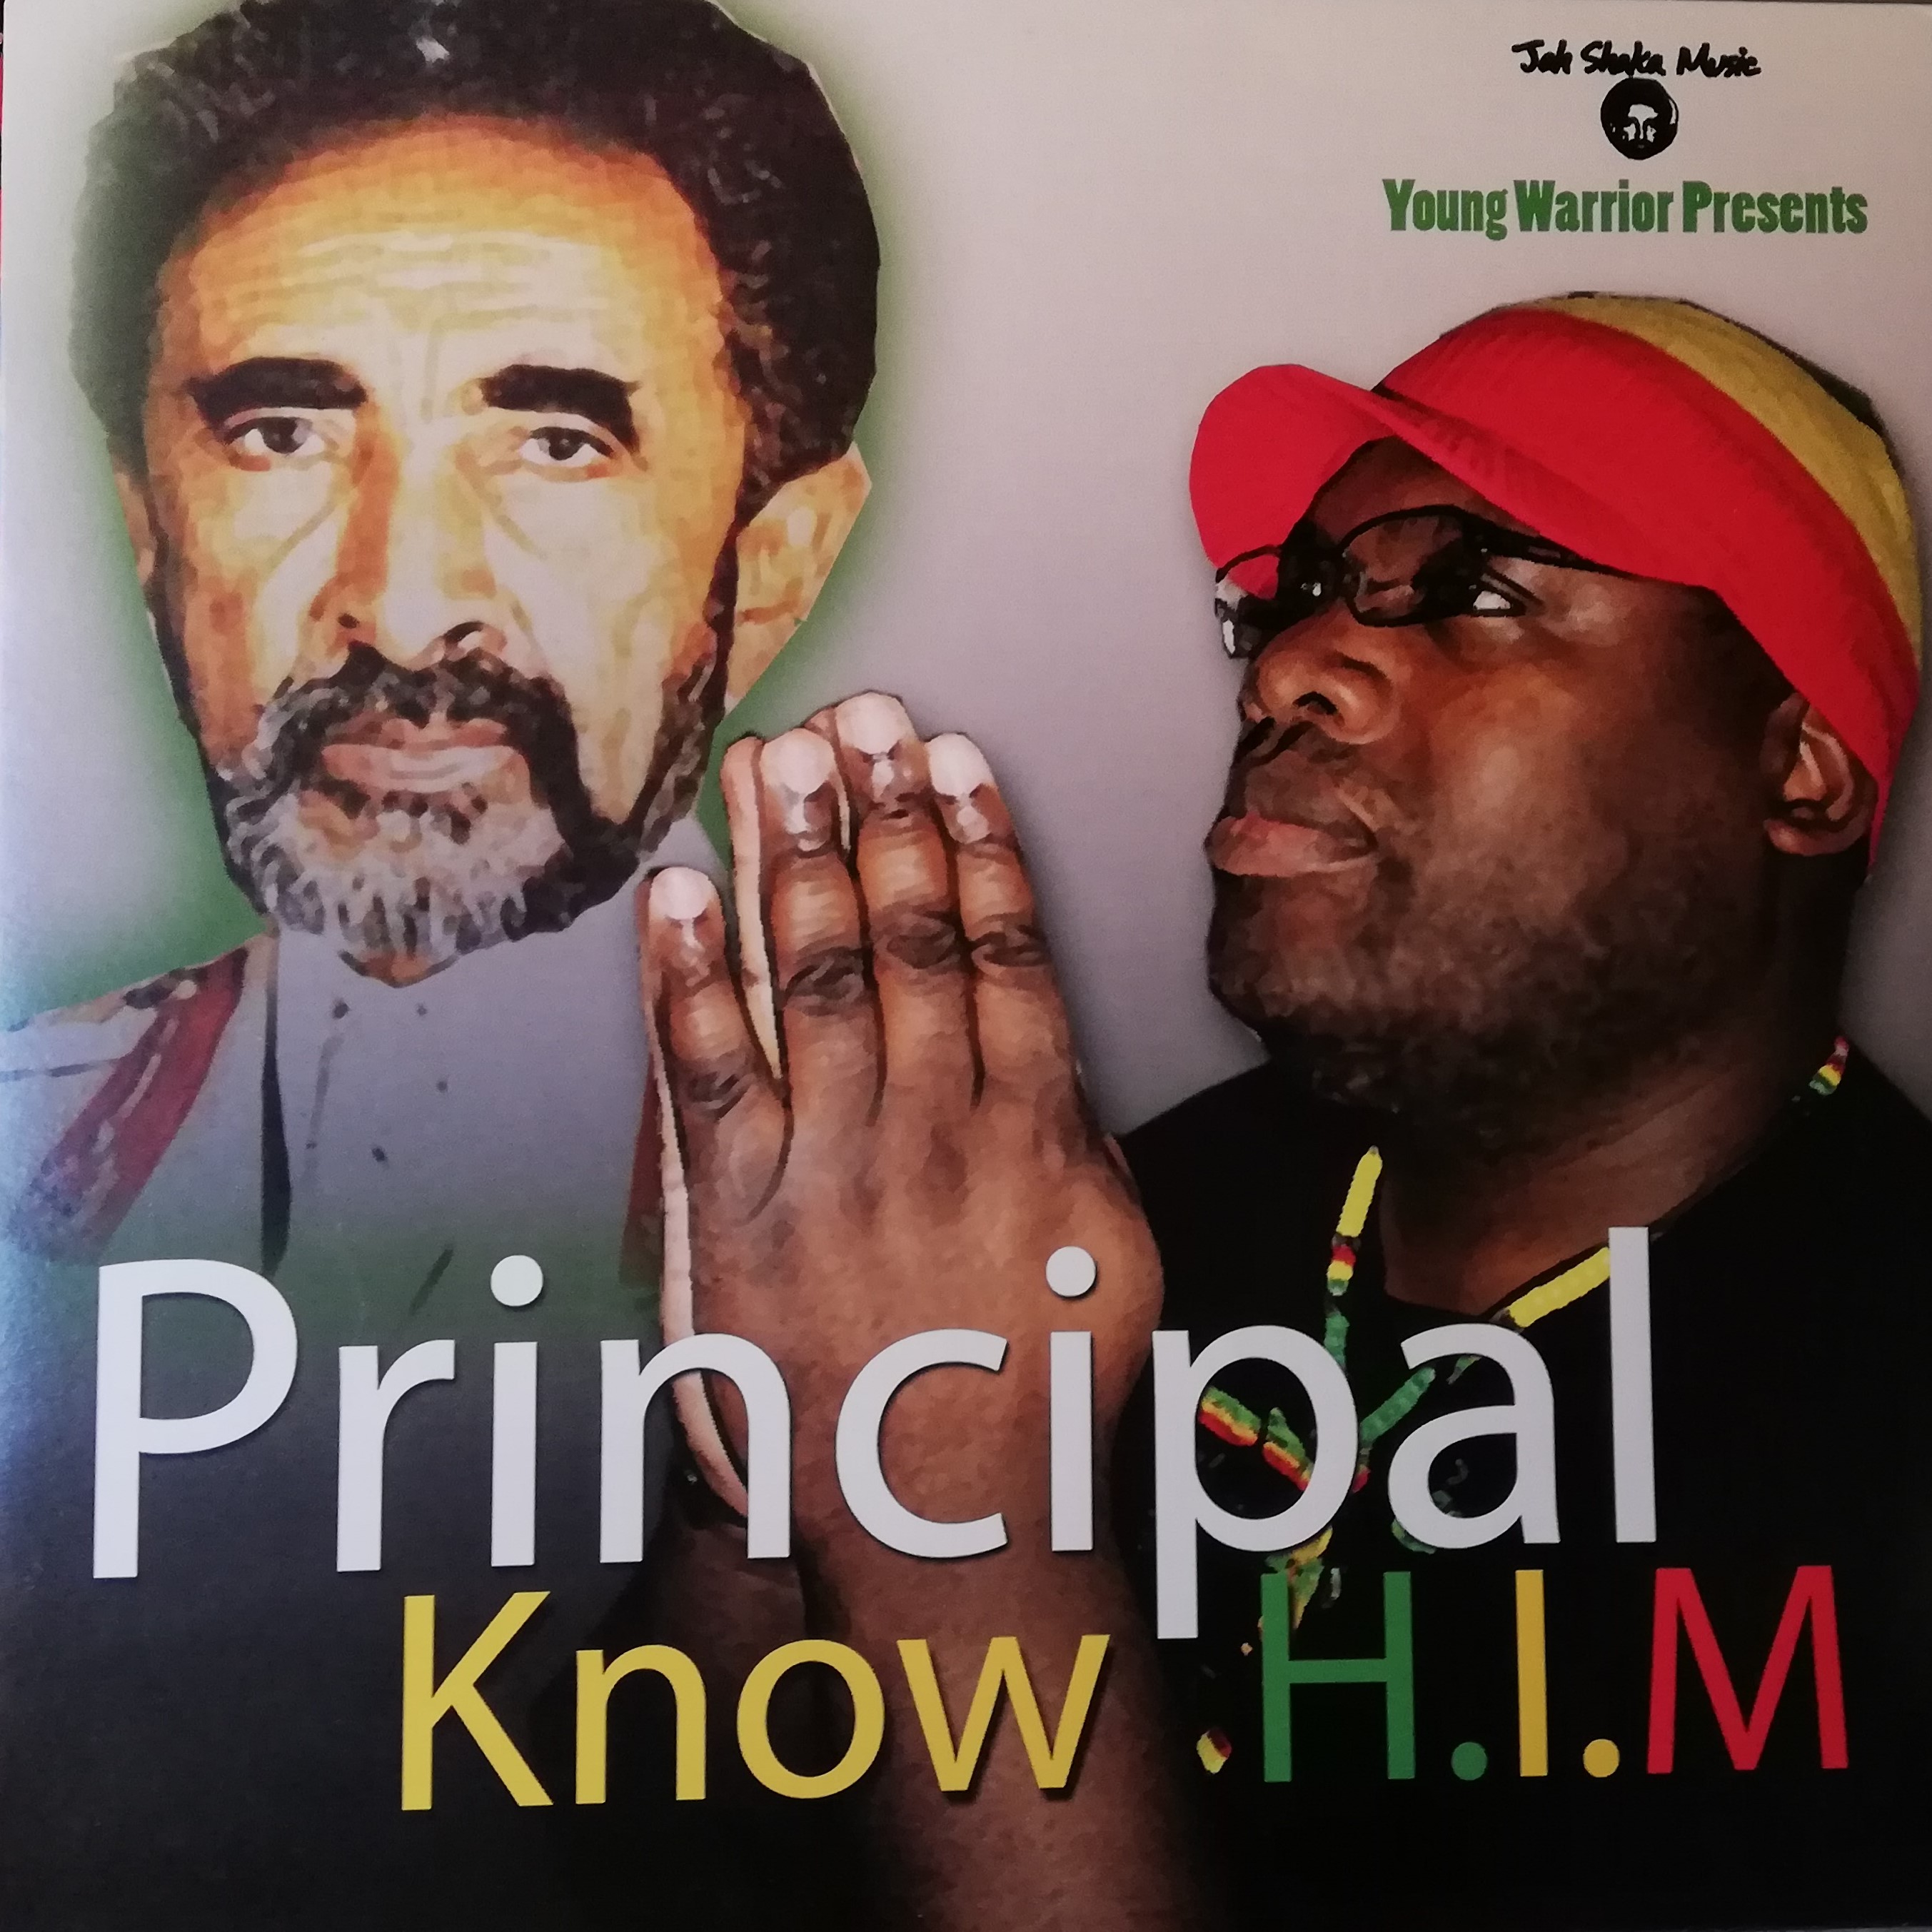 LP PRINCIPAL - KNOW H.I.M